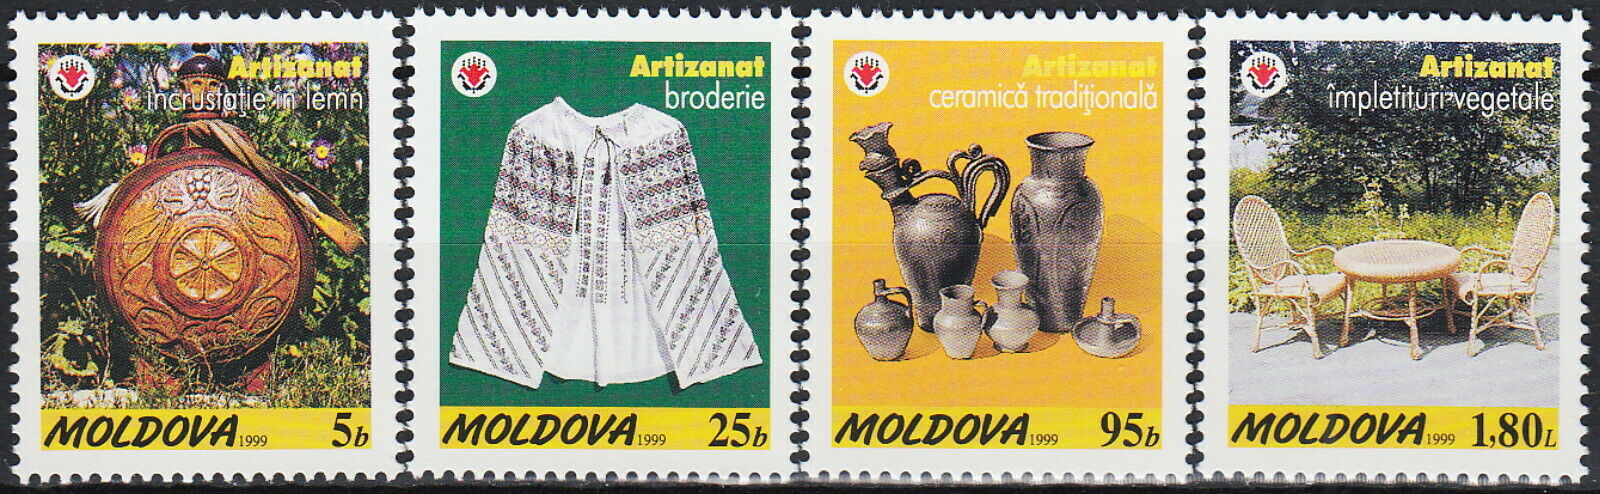 Moldova Arts & Crafts 1999 Mnh-3,50 Euro